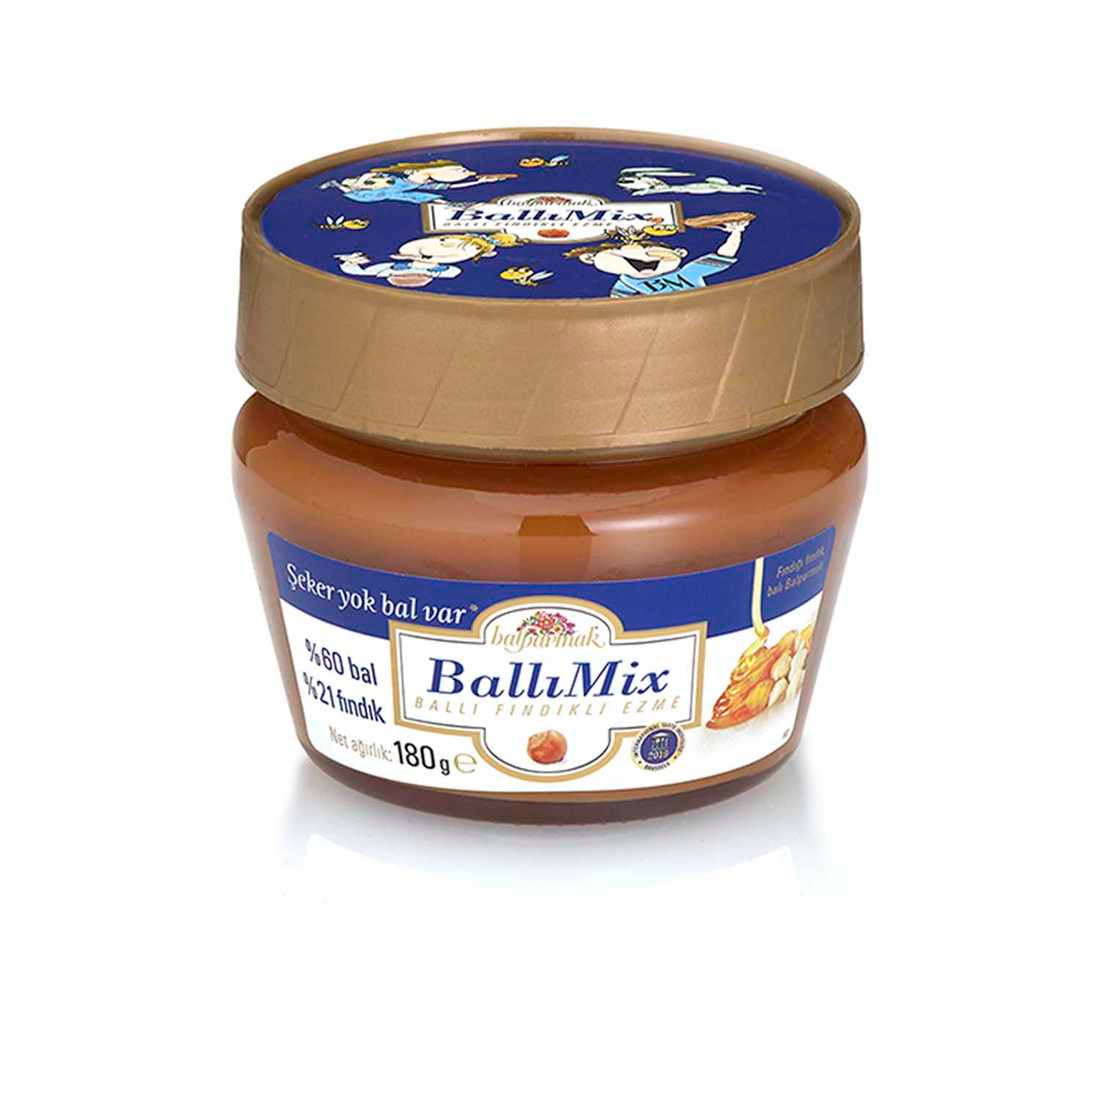 ballıMix hazelnut paste with honey 180g 1